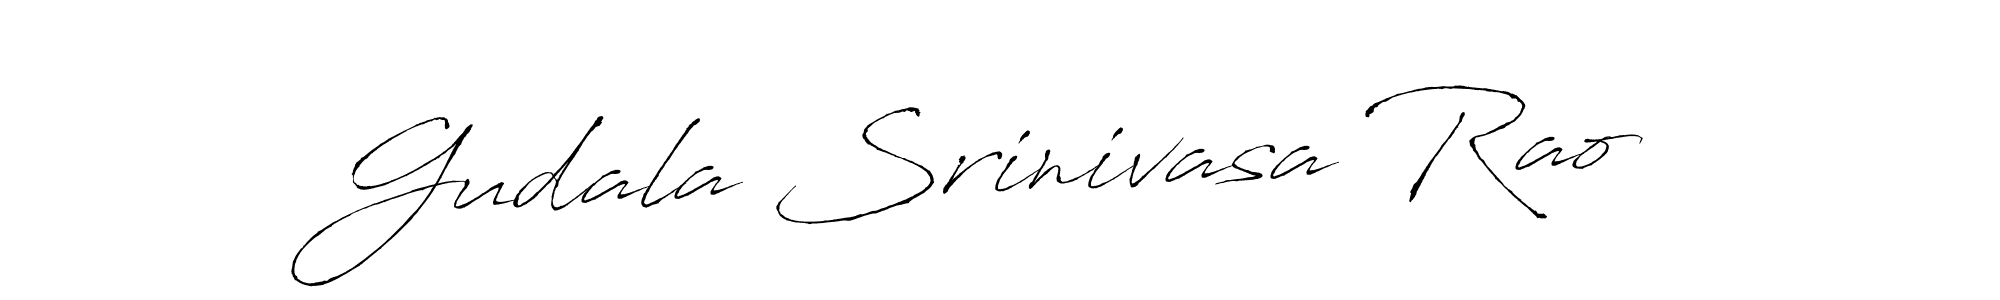 Make a beautiful signature design for name Gudala Srinivasa Rao. Use this online signature maker to create a handwritten signature for free. Gudala Srinivasa Rao signature style 6 images and pictures png